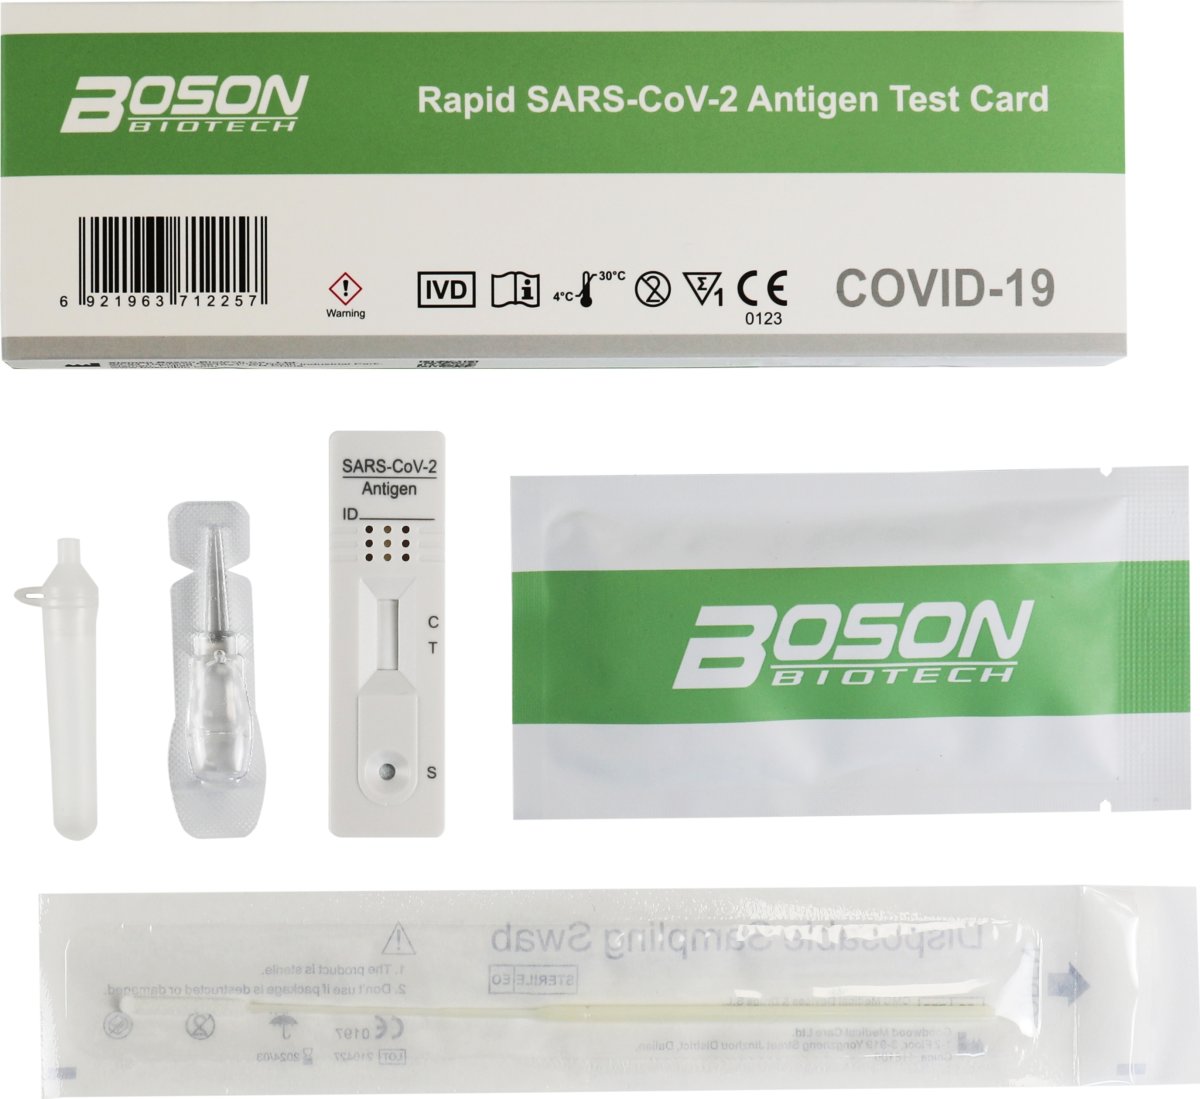 Boson Antigen Test Covid-19 Nästest